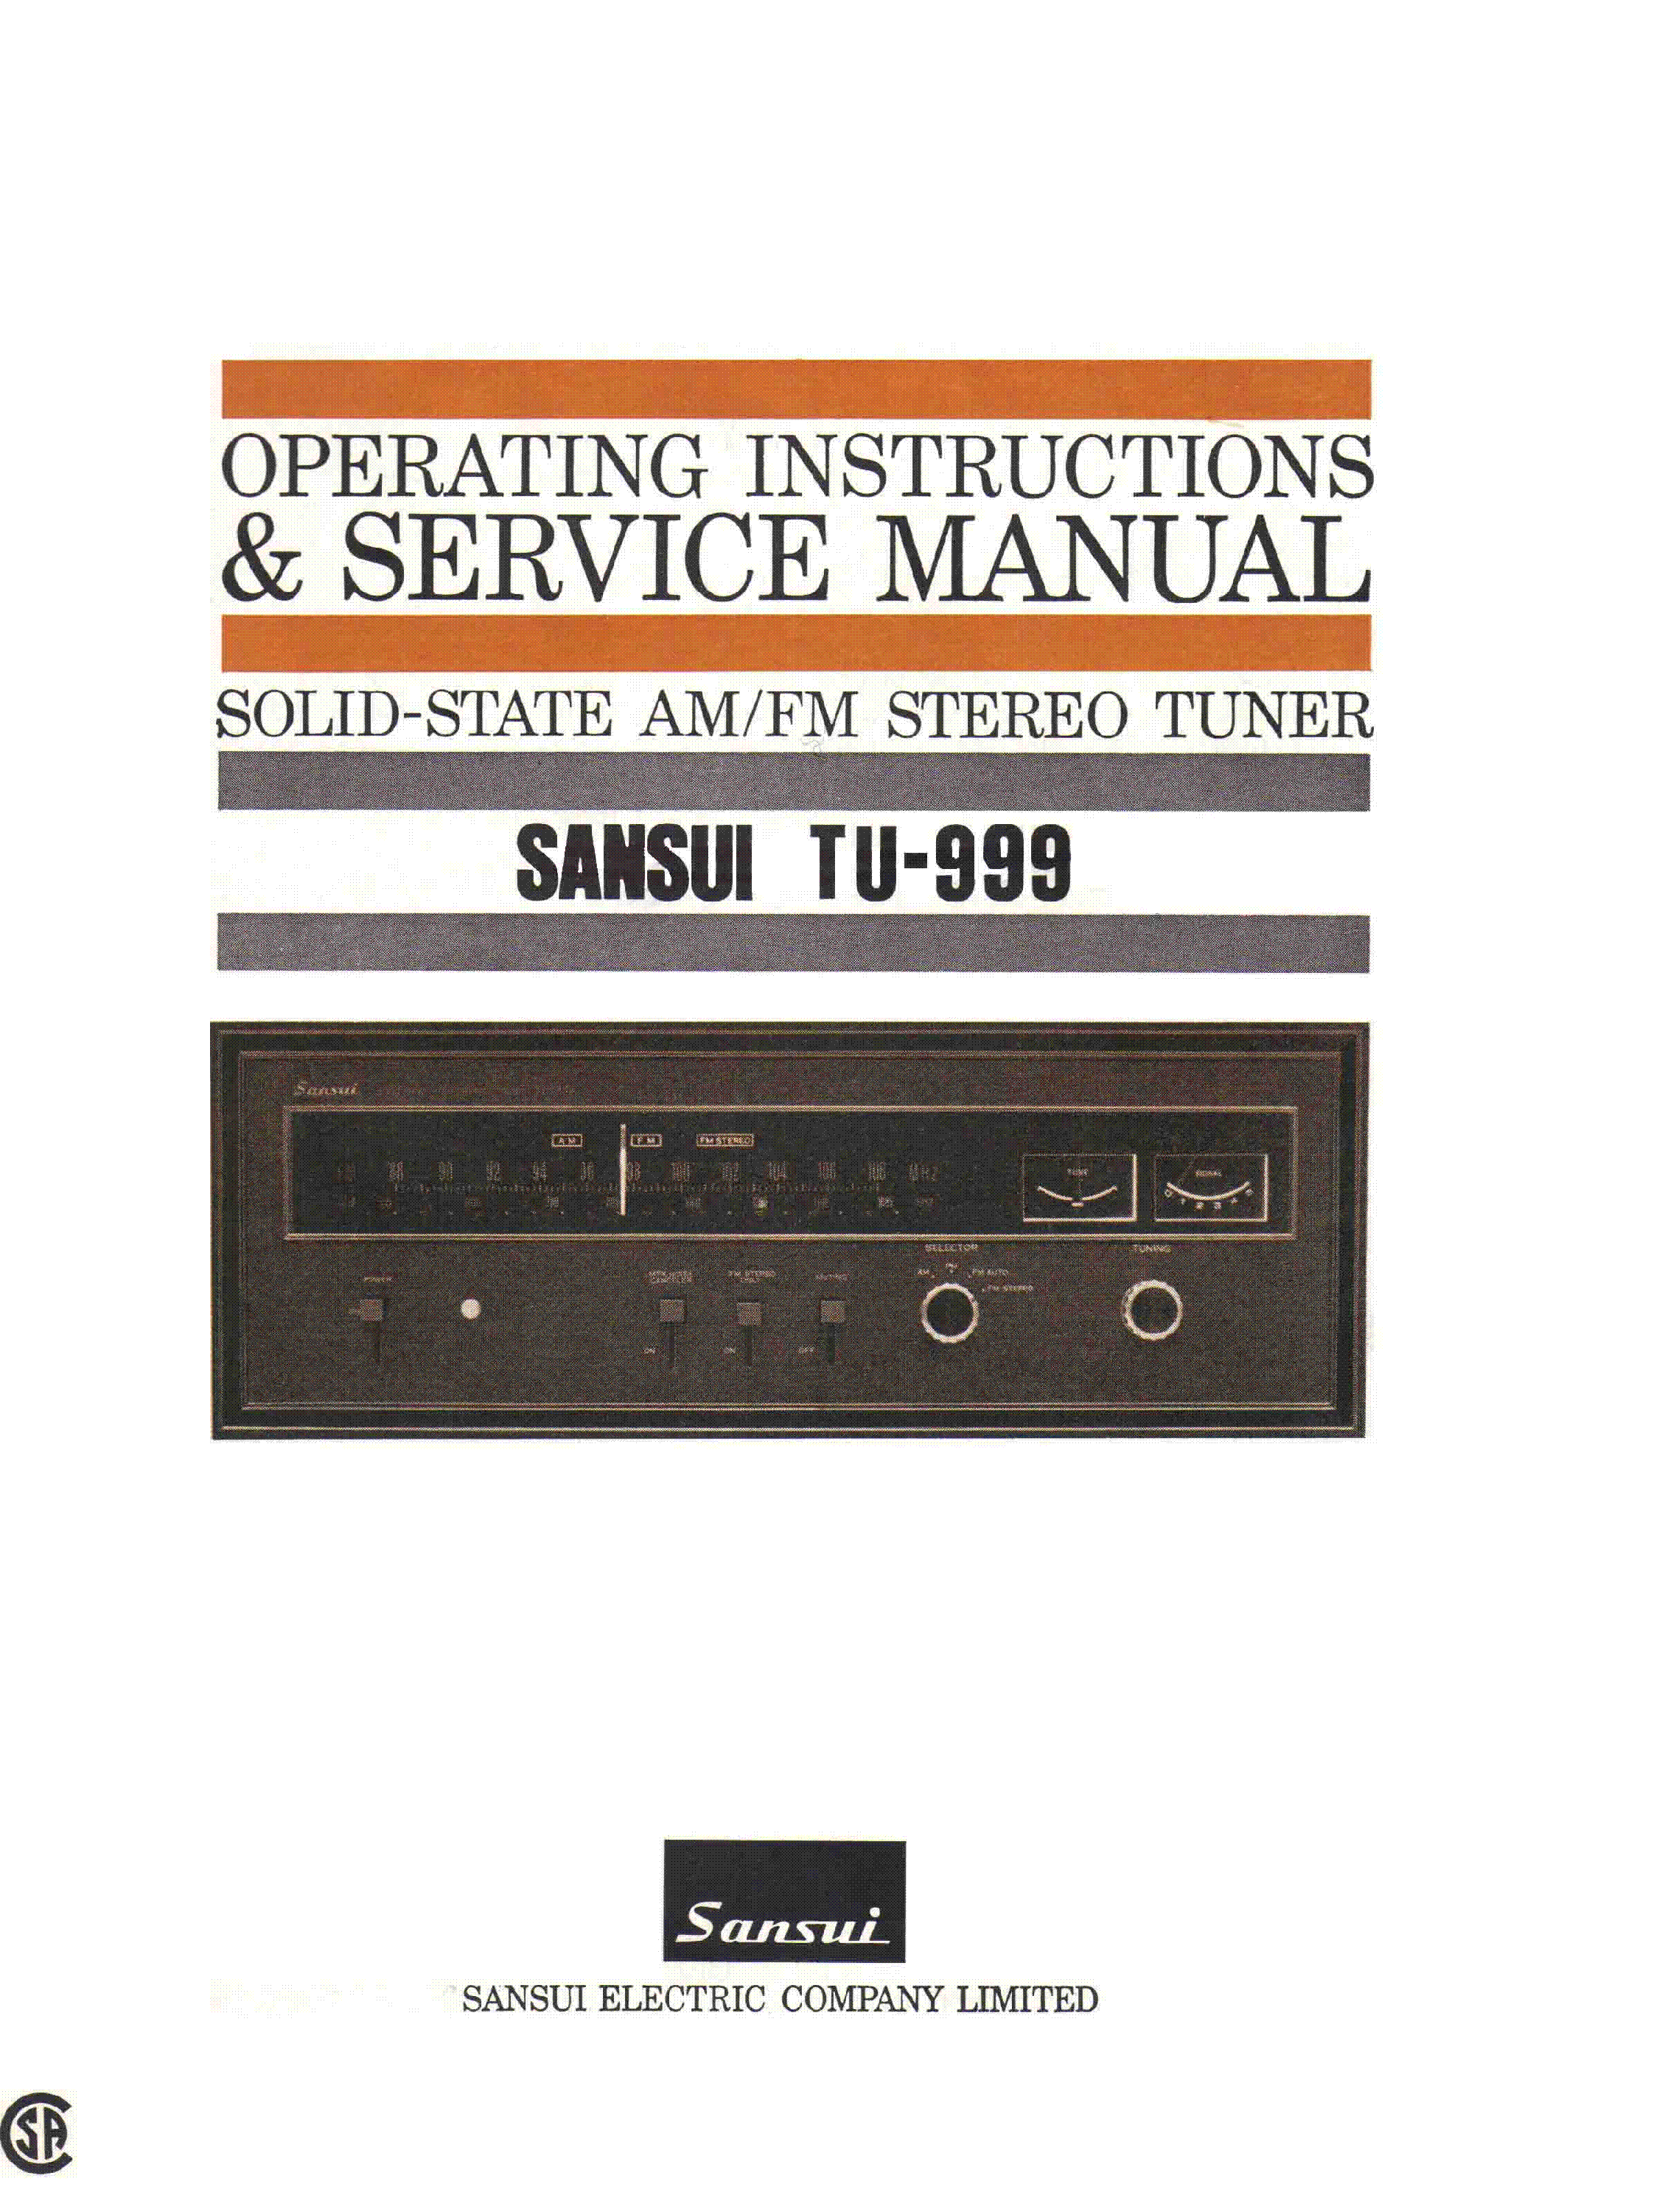 Sansui Manuals Free